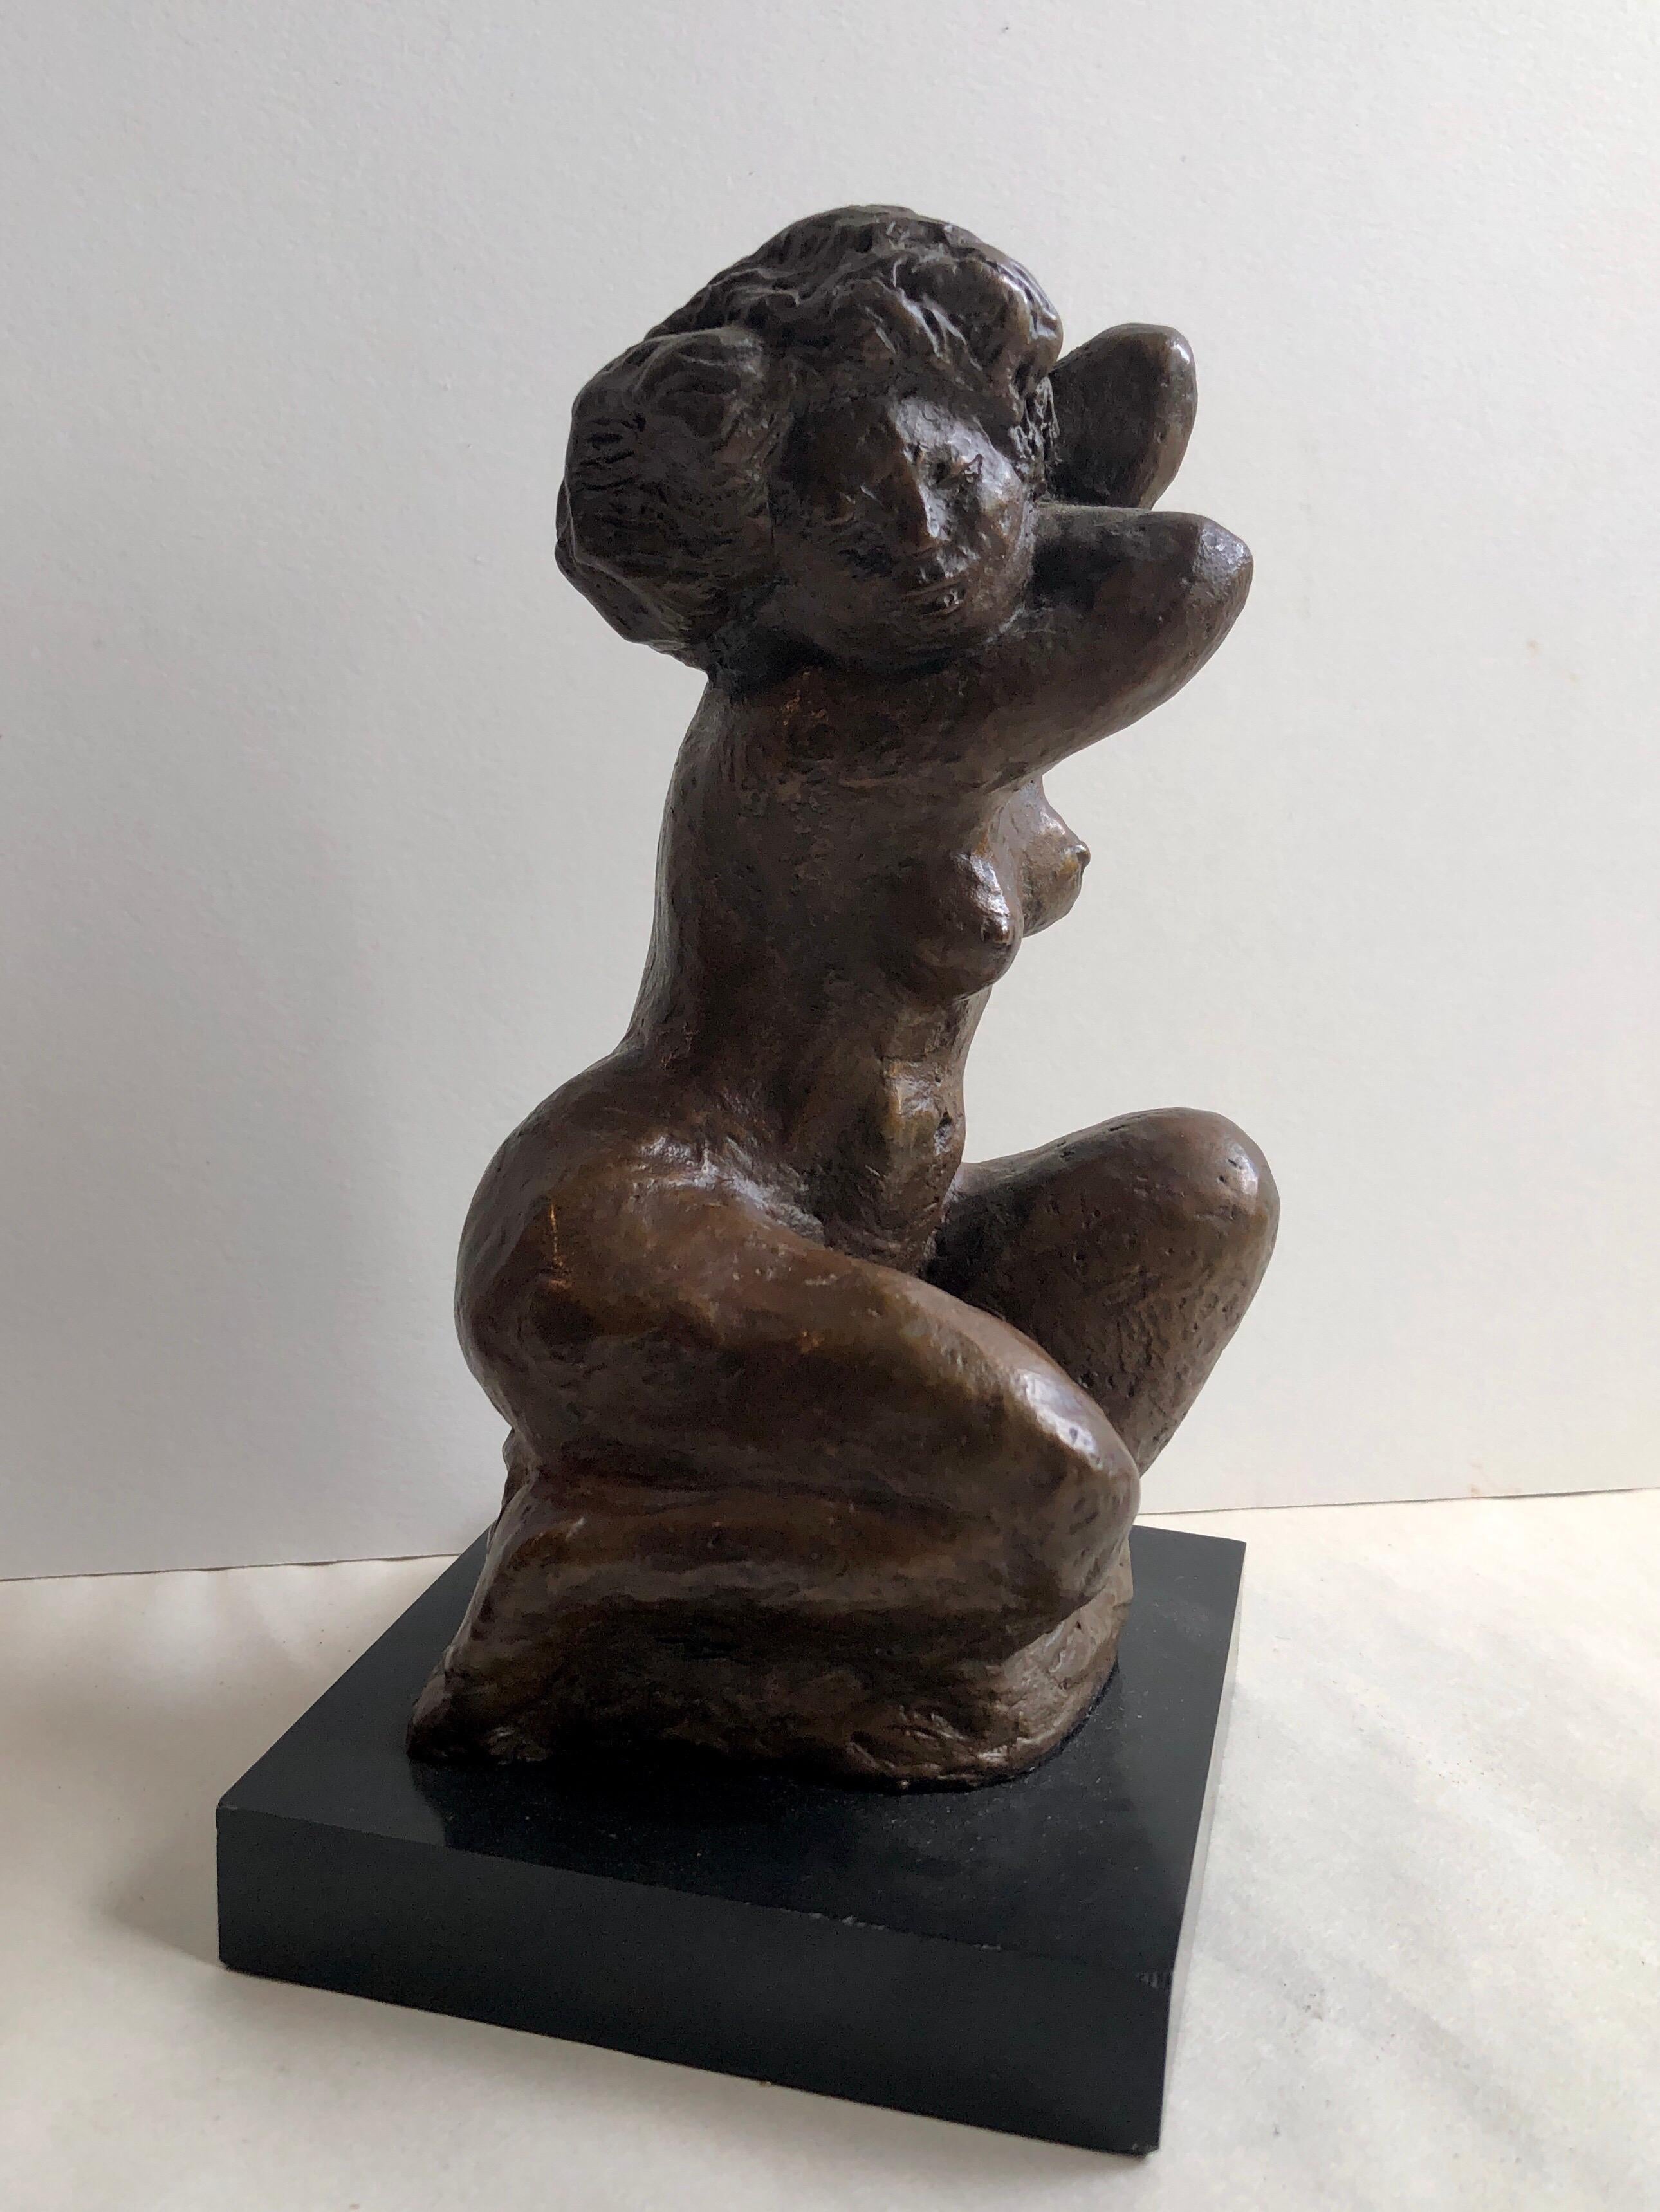 Sculpture de nu féminin en bronze moderniste, WPA, artiste de l'hôtel Chelsea de New York 1